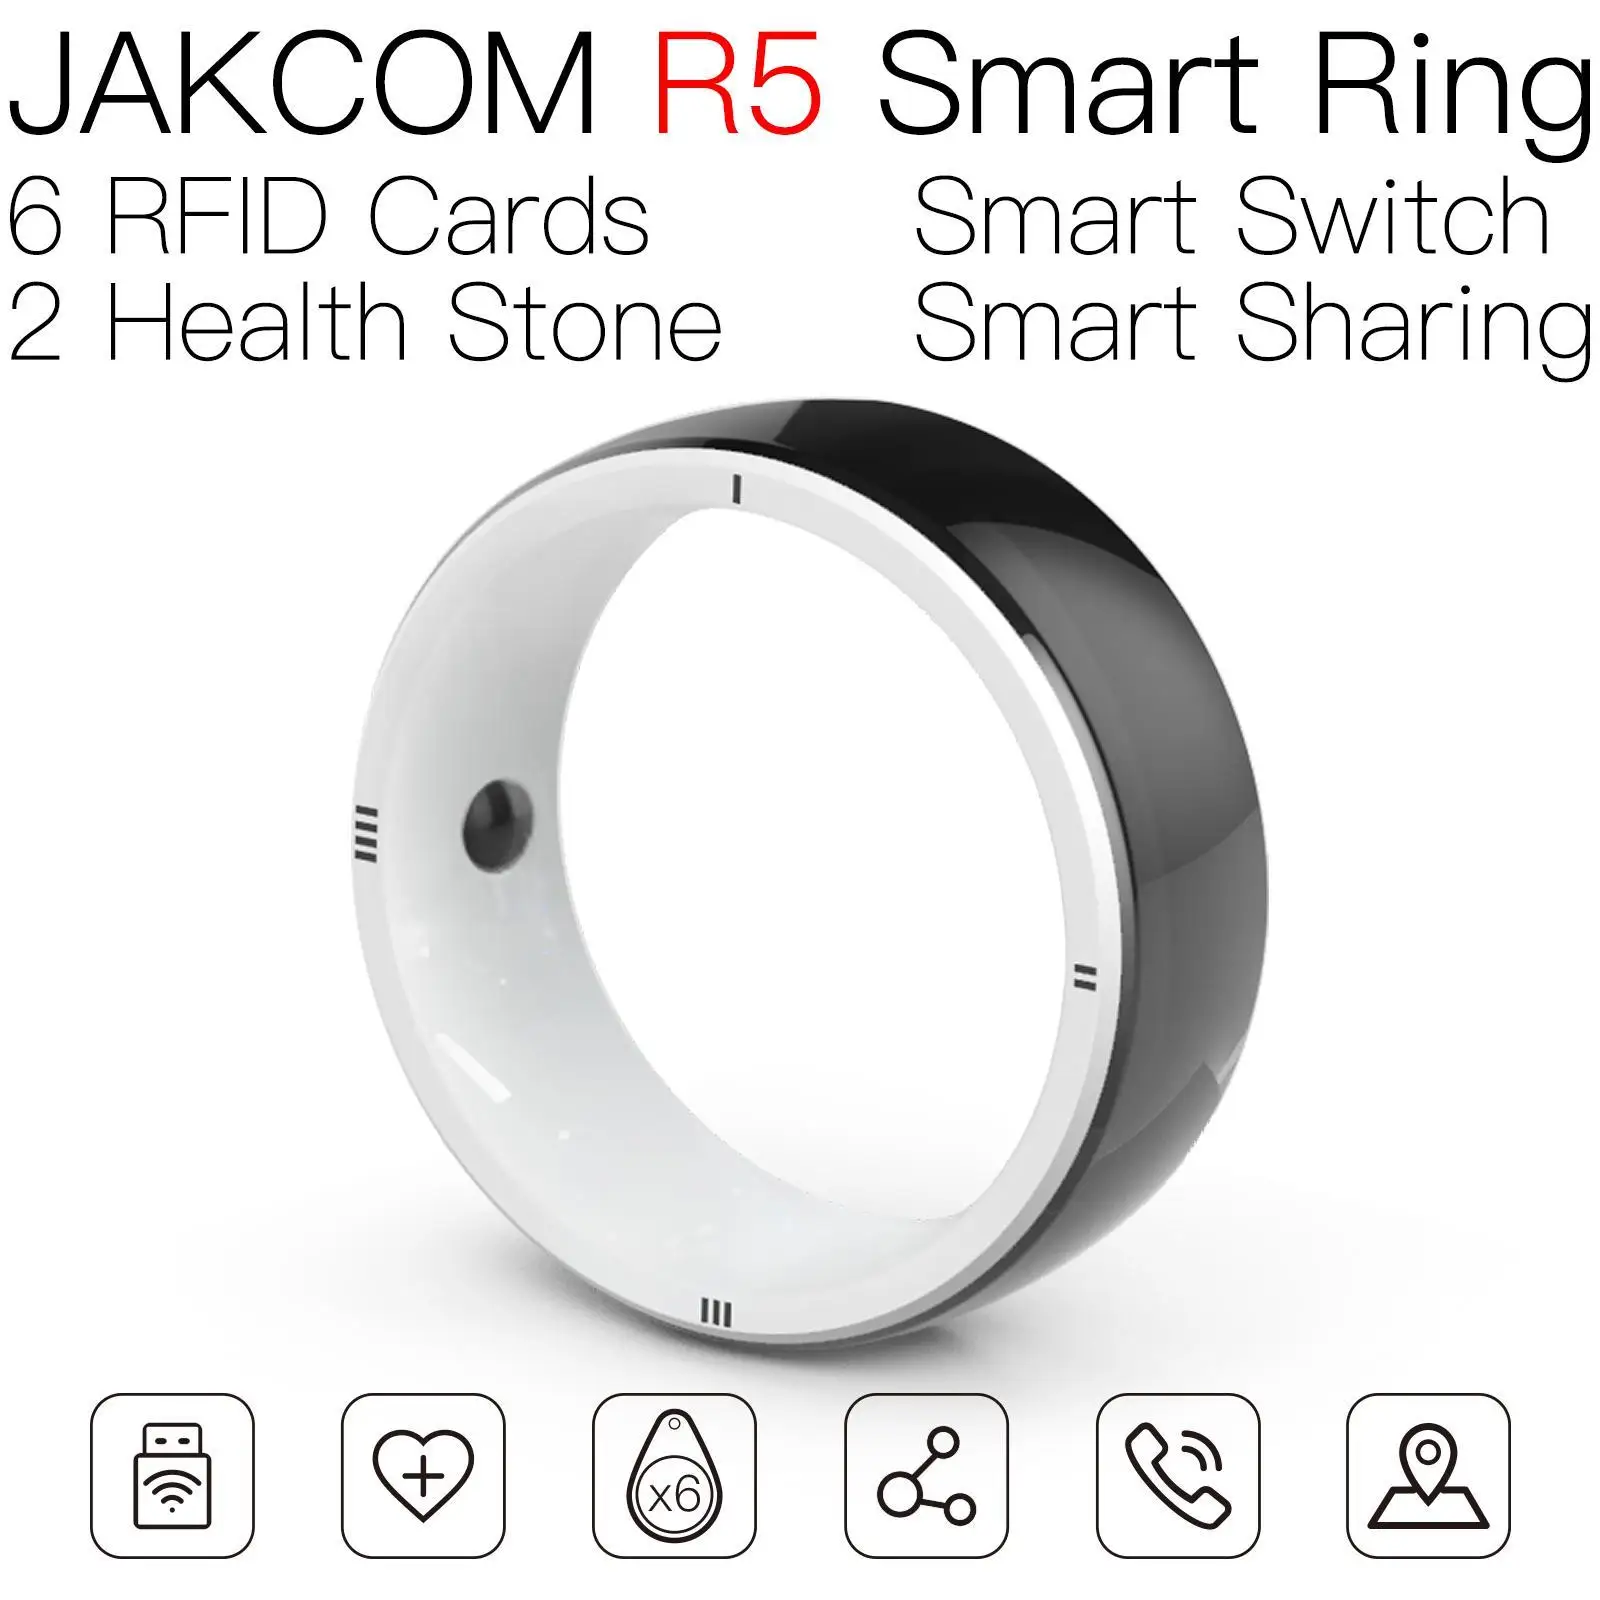 

JAKCOM R5 Smart Ring Nice than nfc tag 215 sticker 100 pcs rewritable ring bussines card uhf rfid store t5577 ntag 216 metal